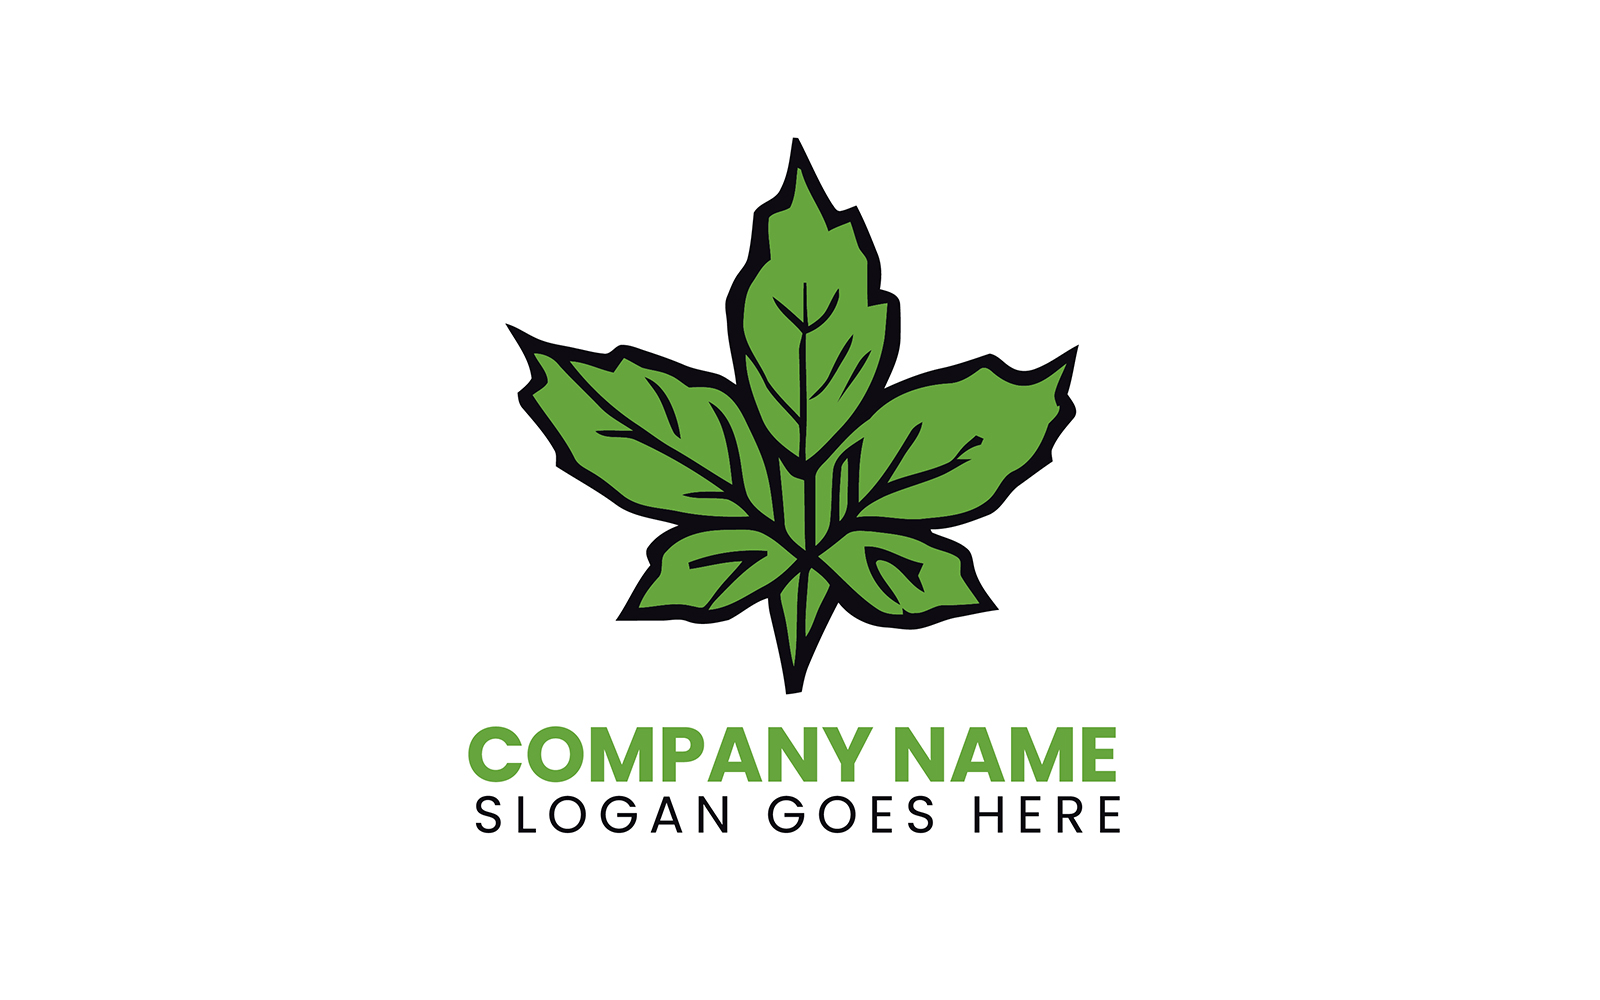 Green leaf logo on a white background.